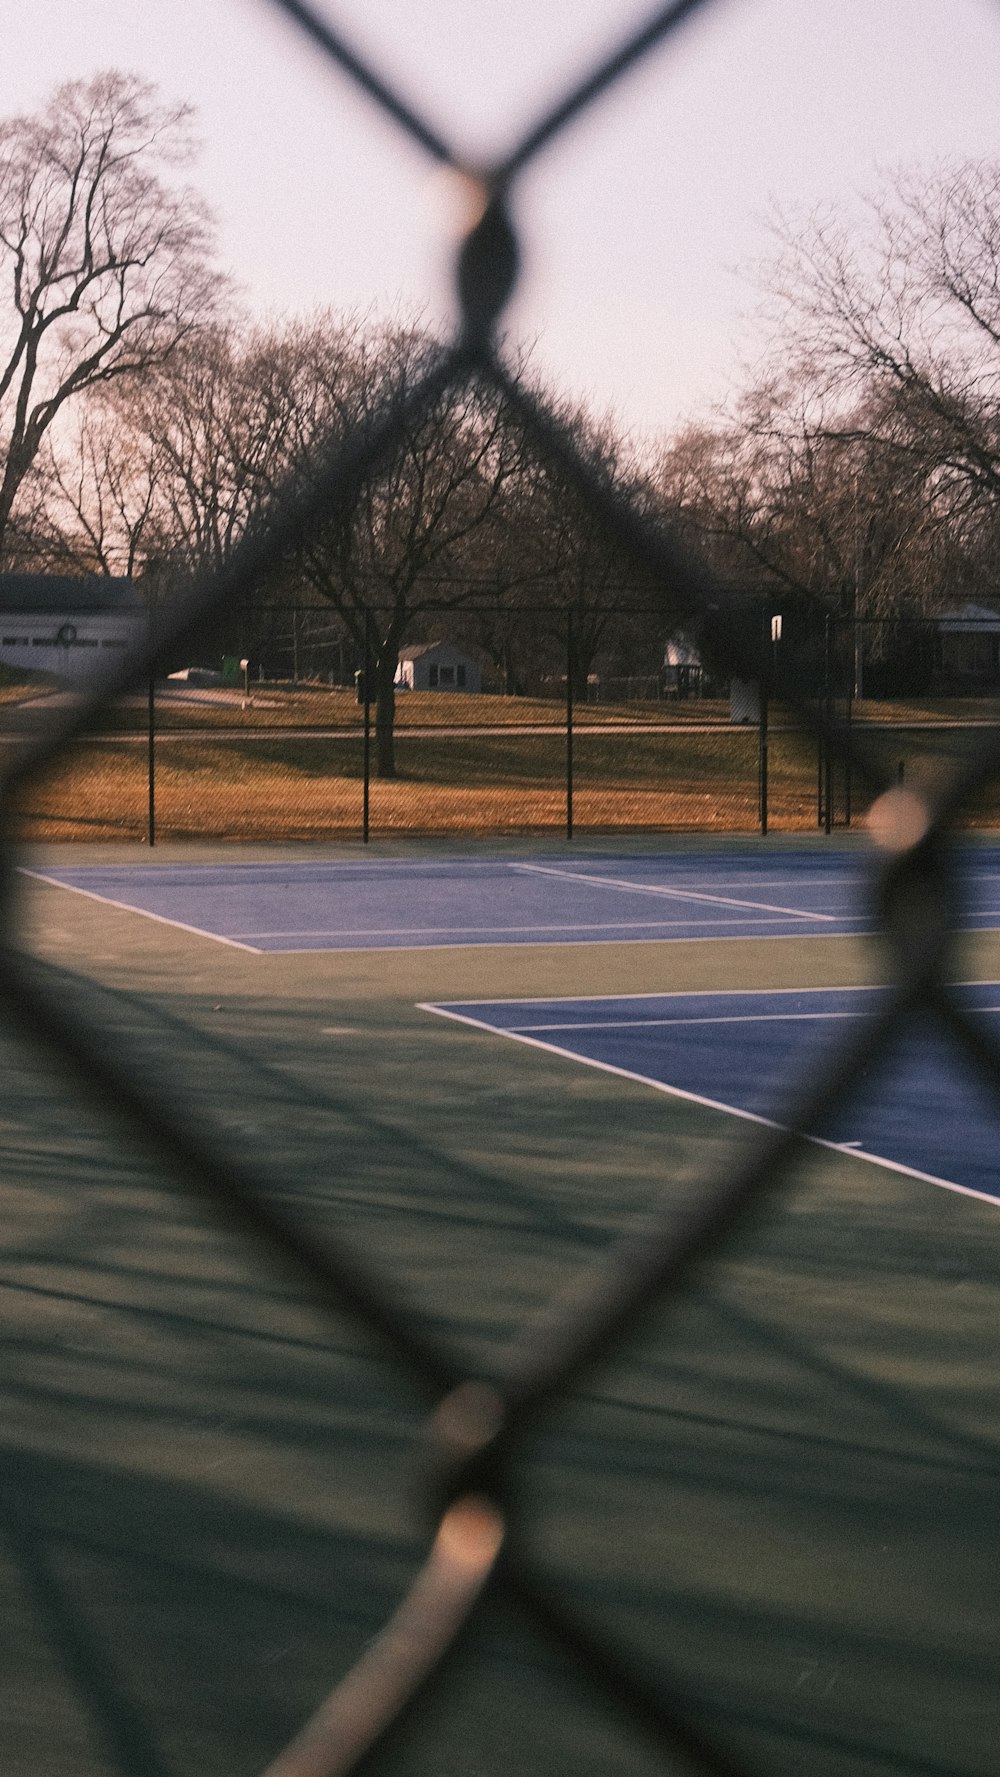 a tennis court seen through a chain link fence